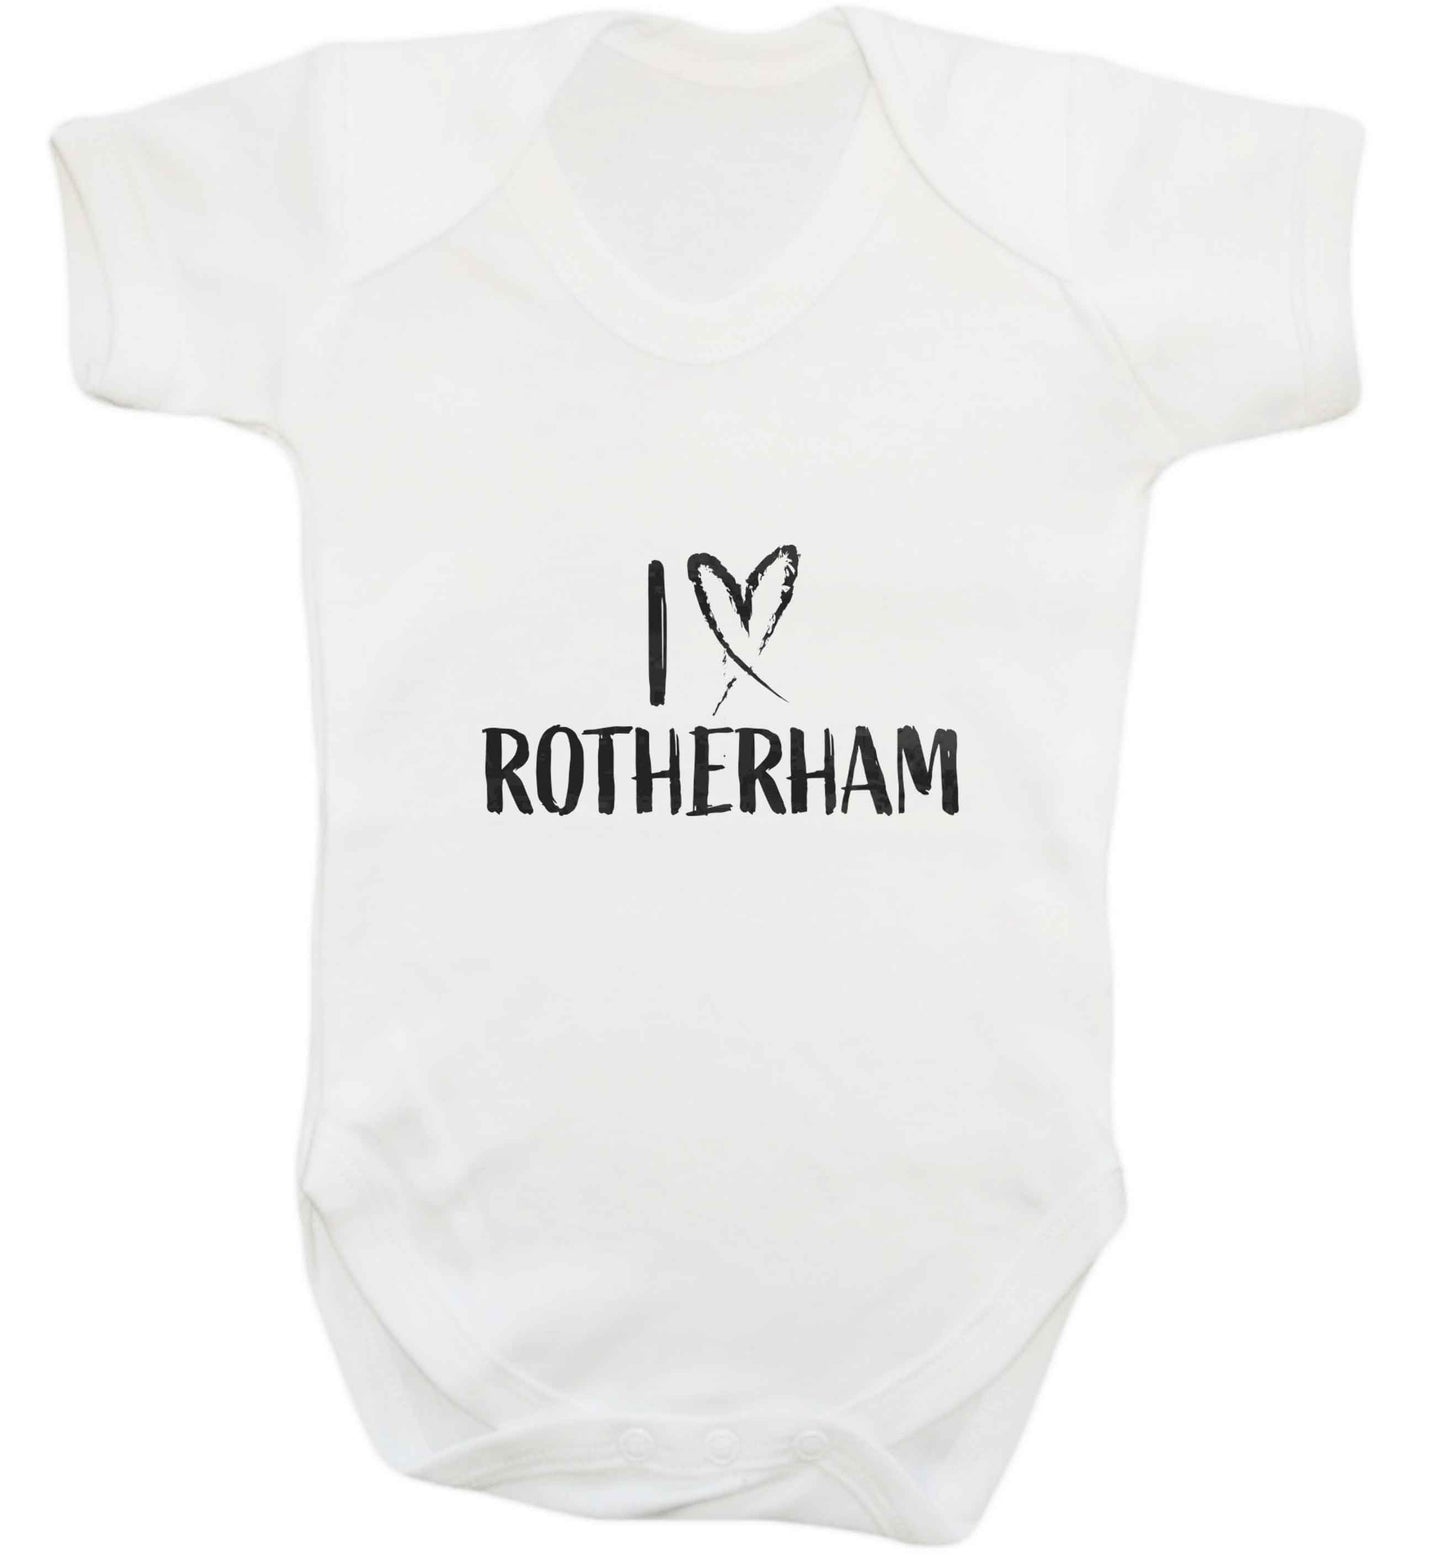 I love Rotherham baby vest white 18-24 months